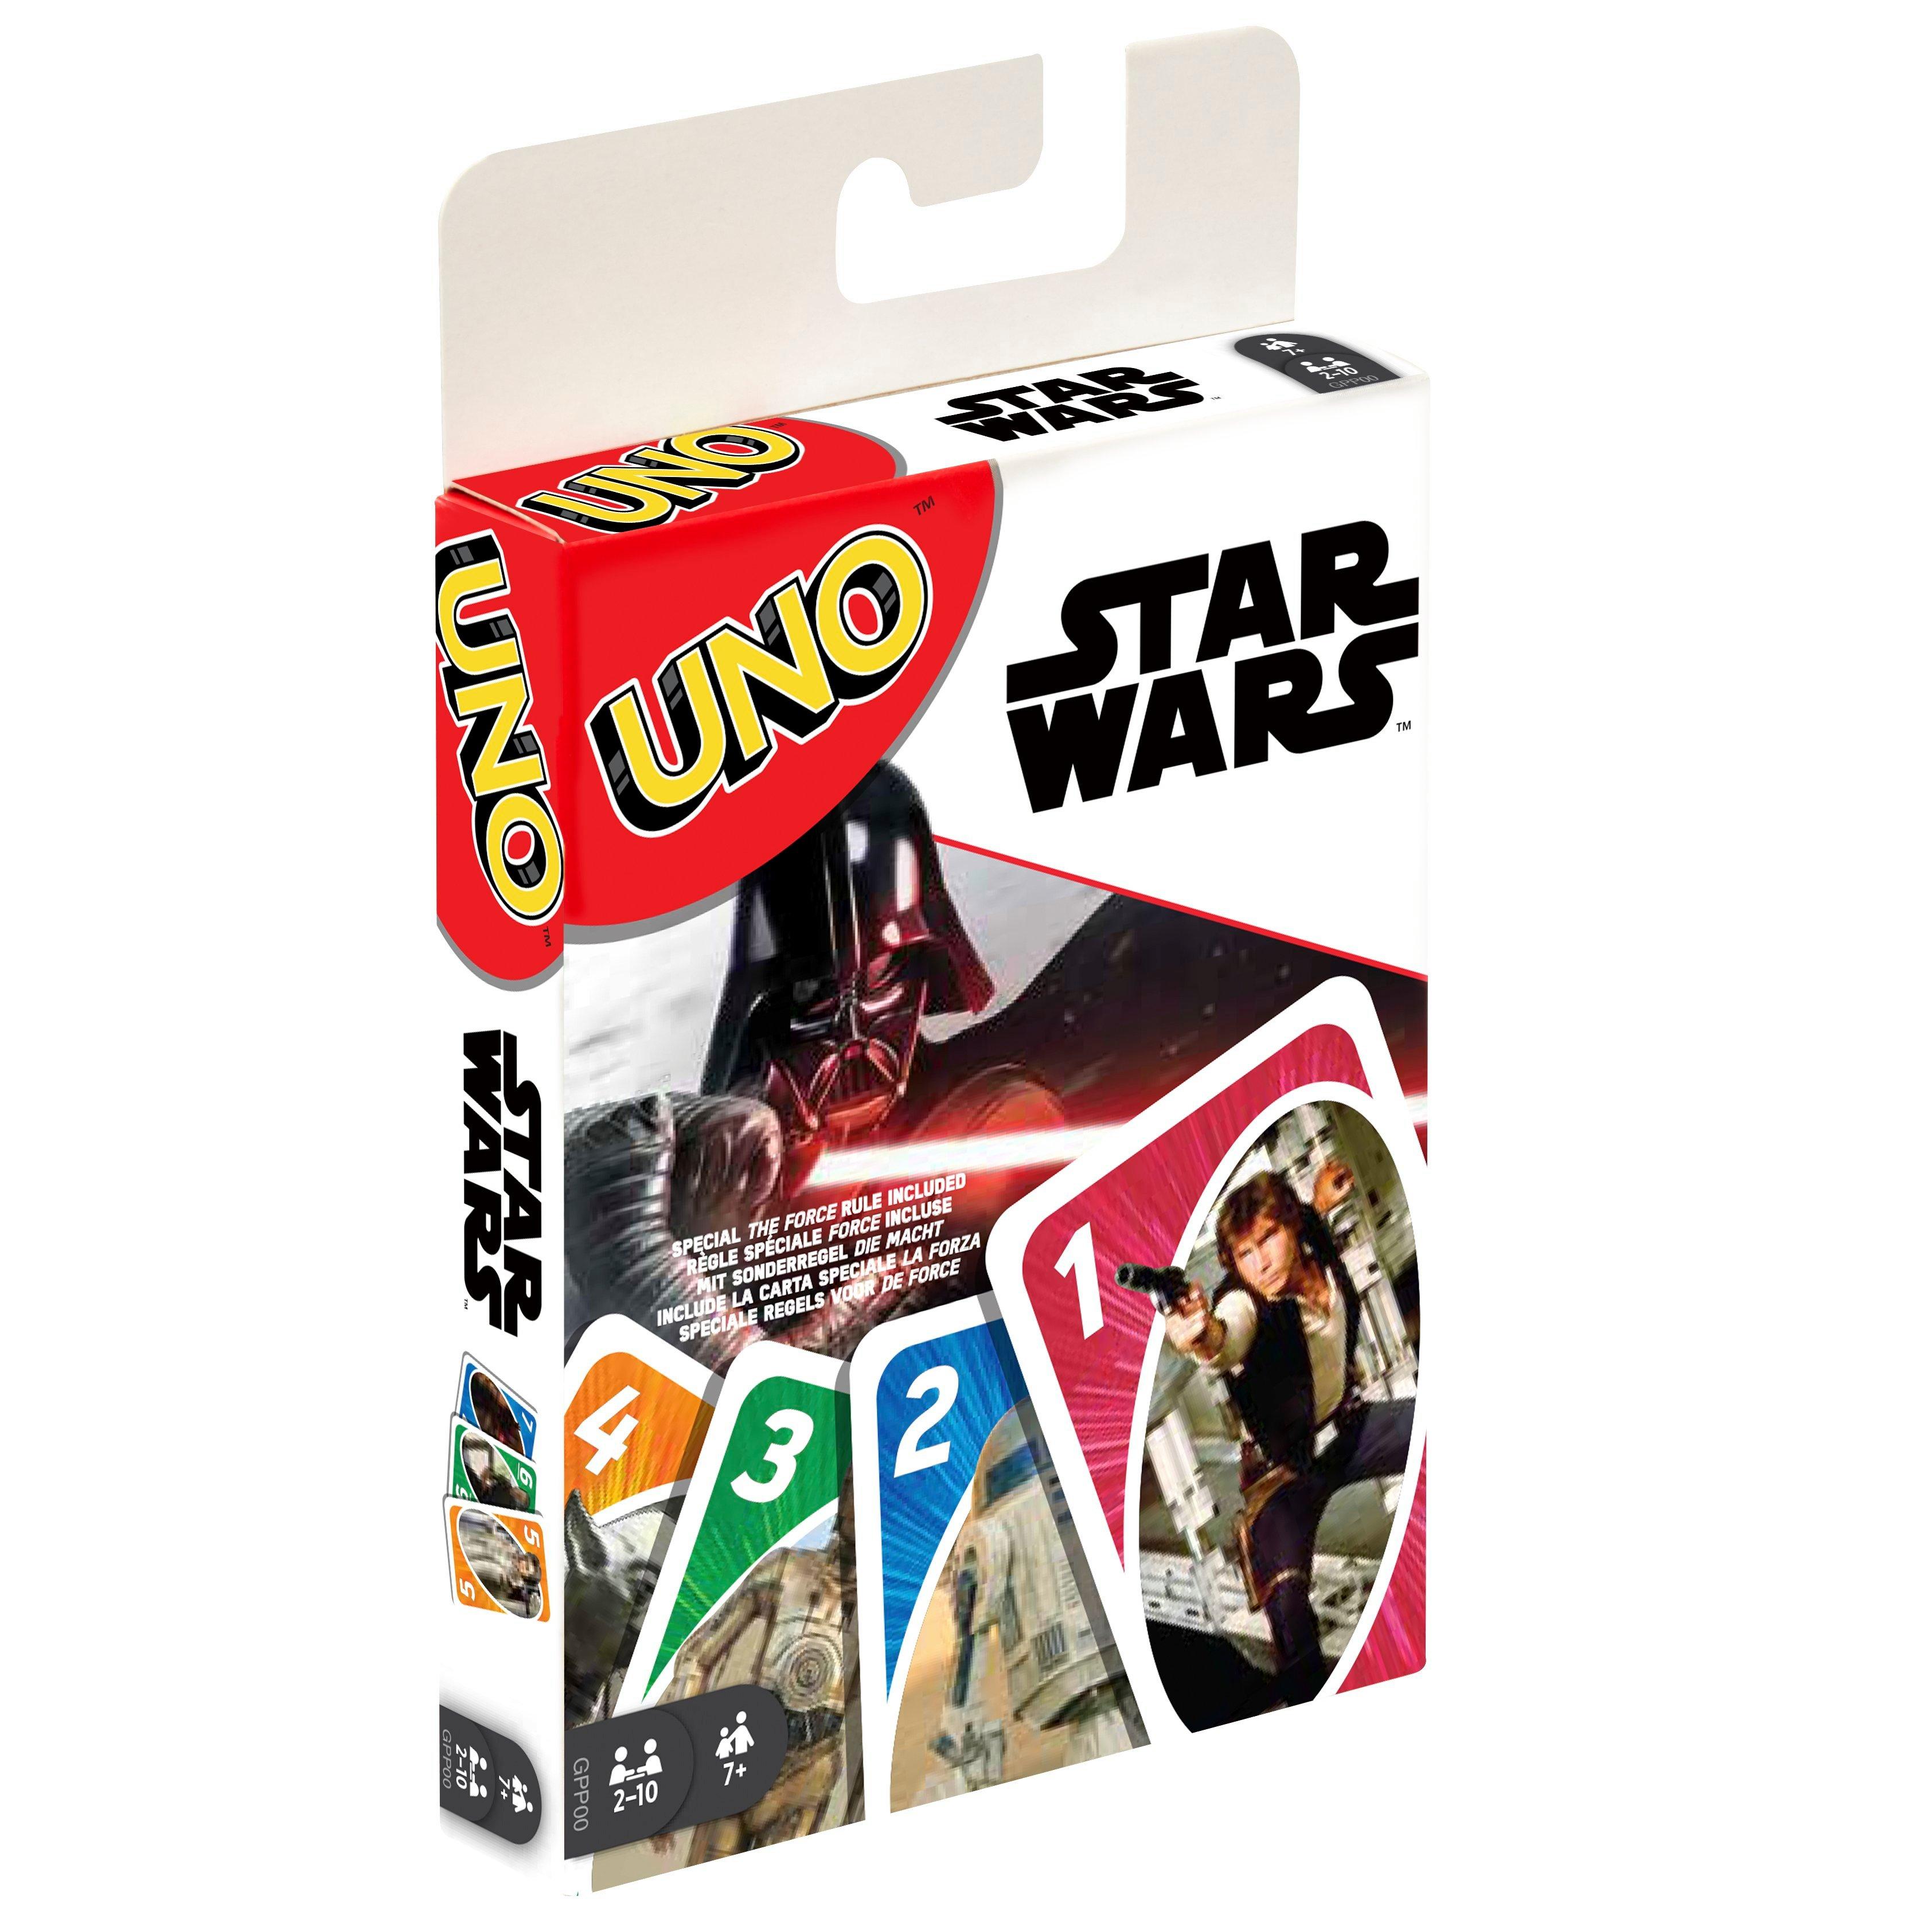 https://media.gamestop.com/i/gamestop/20005704/UNO-Star-Wars-Card-Game